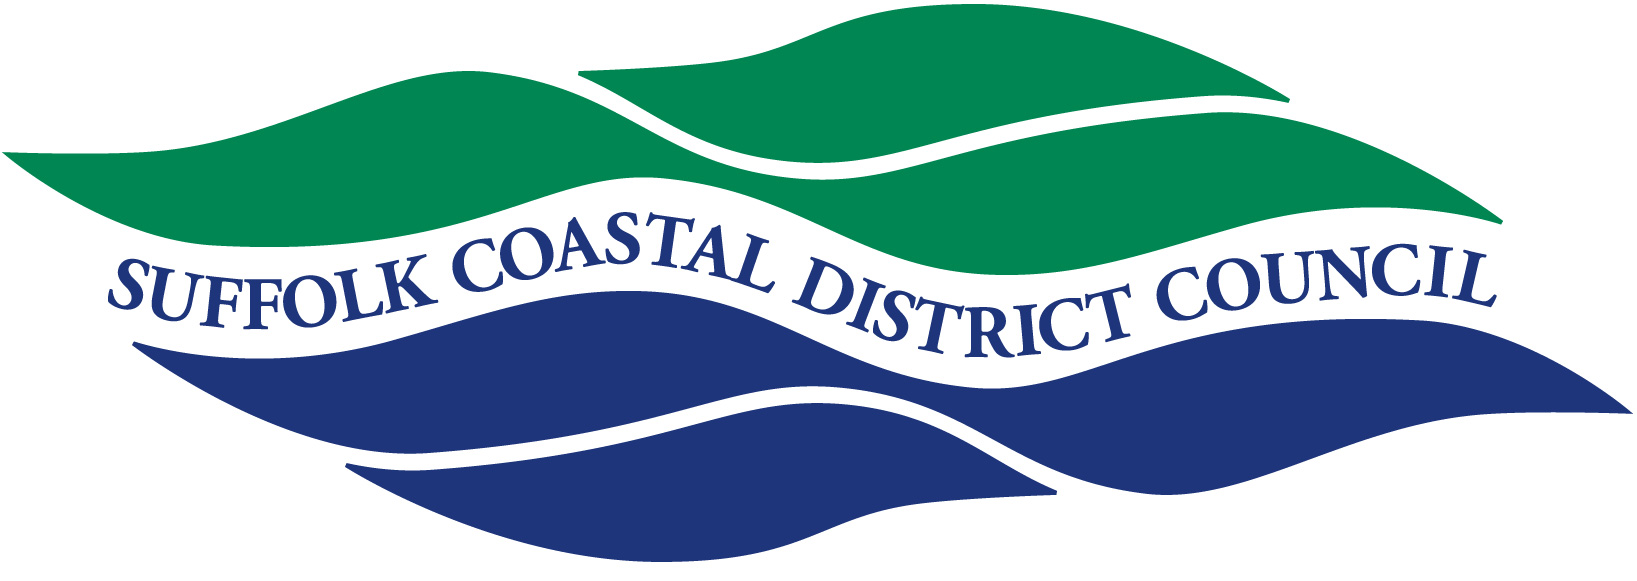 suffolk coastal district council scdc